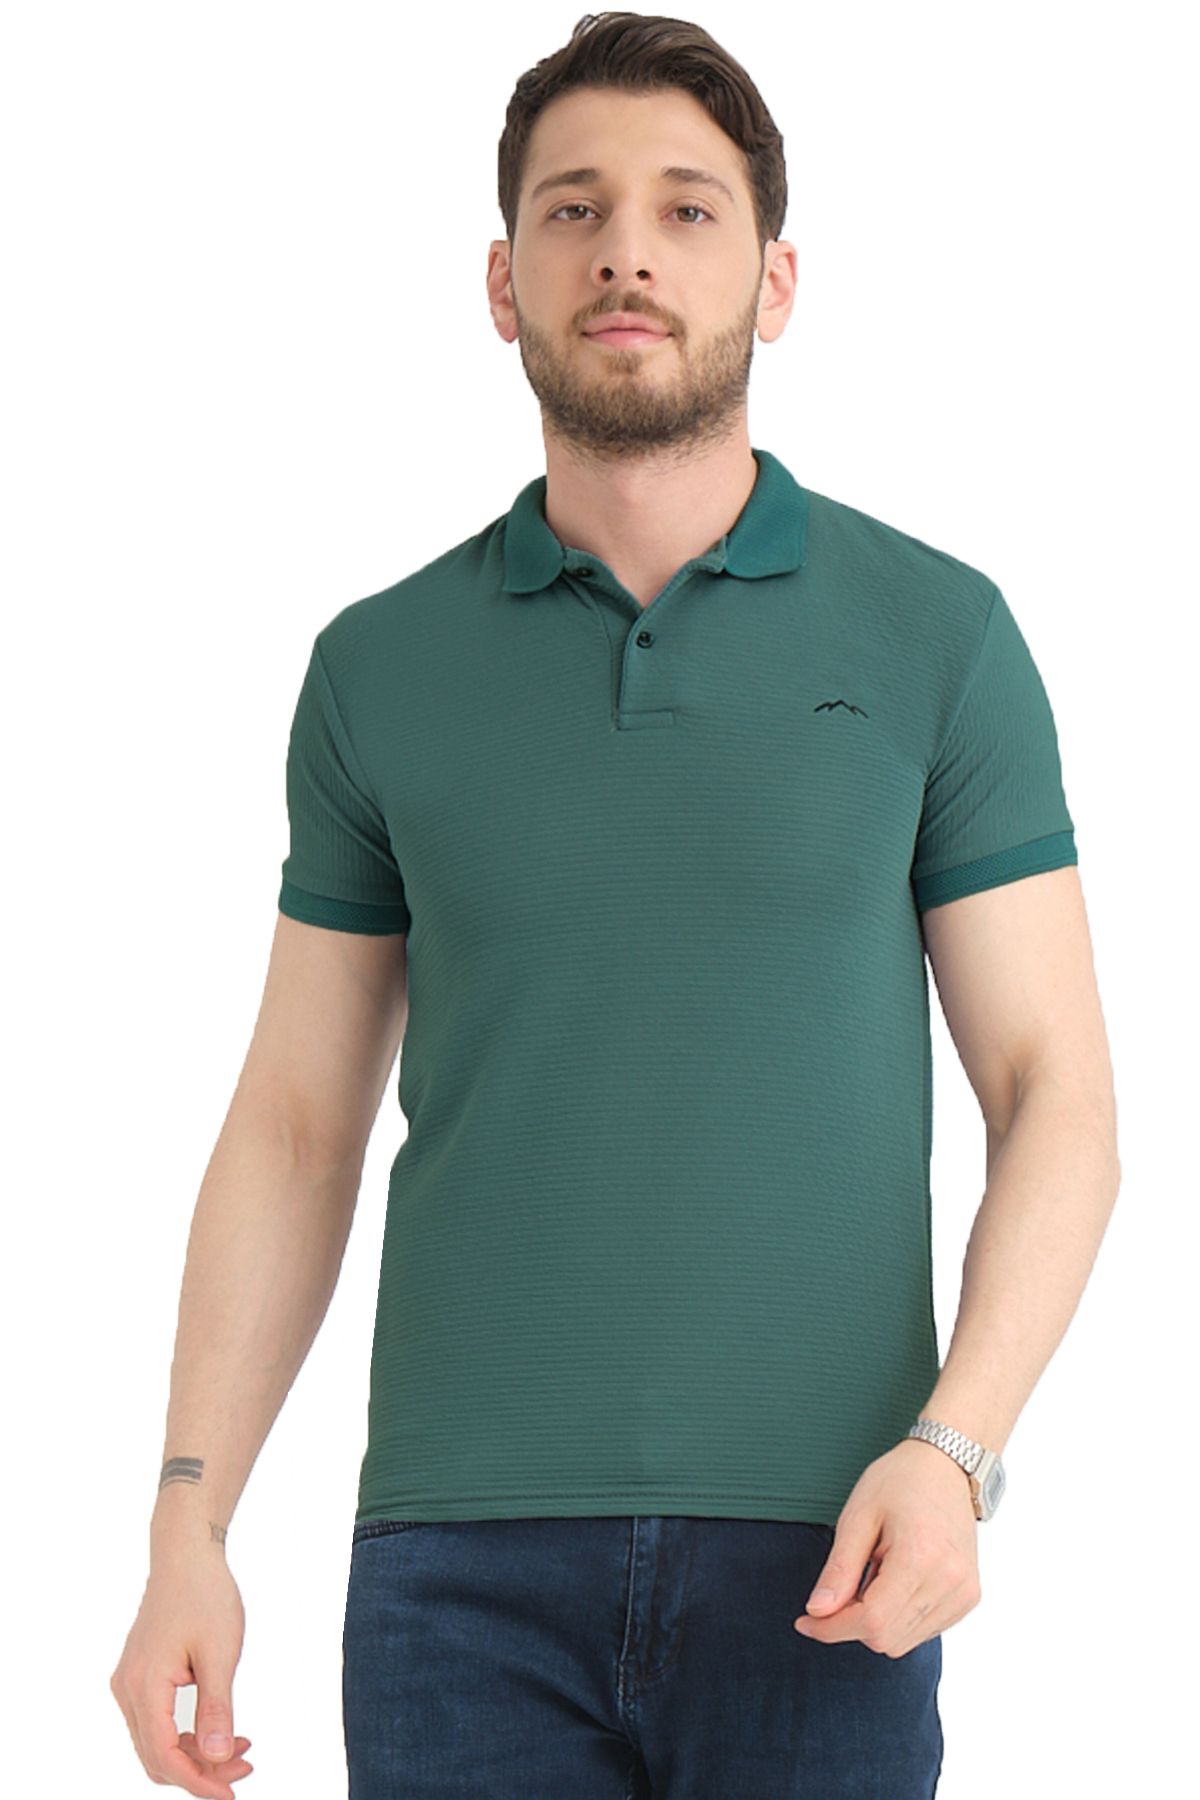 Varetta Erkek Yeşil Polo Yaka Yazlık Pamuklu Kısa Kollu T shirt